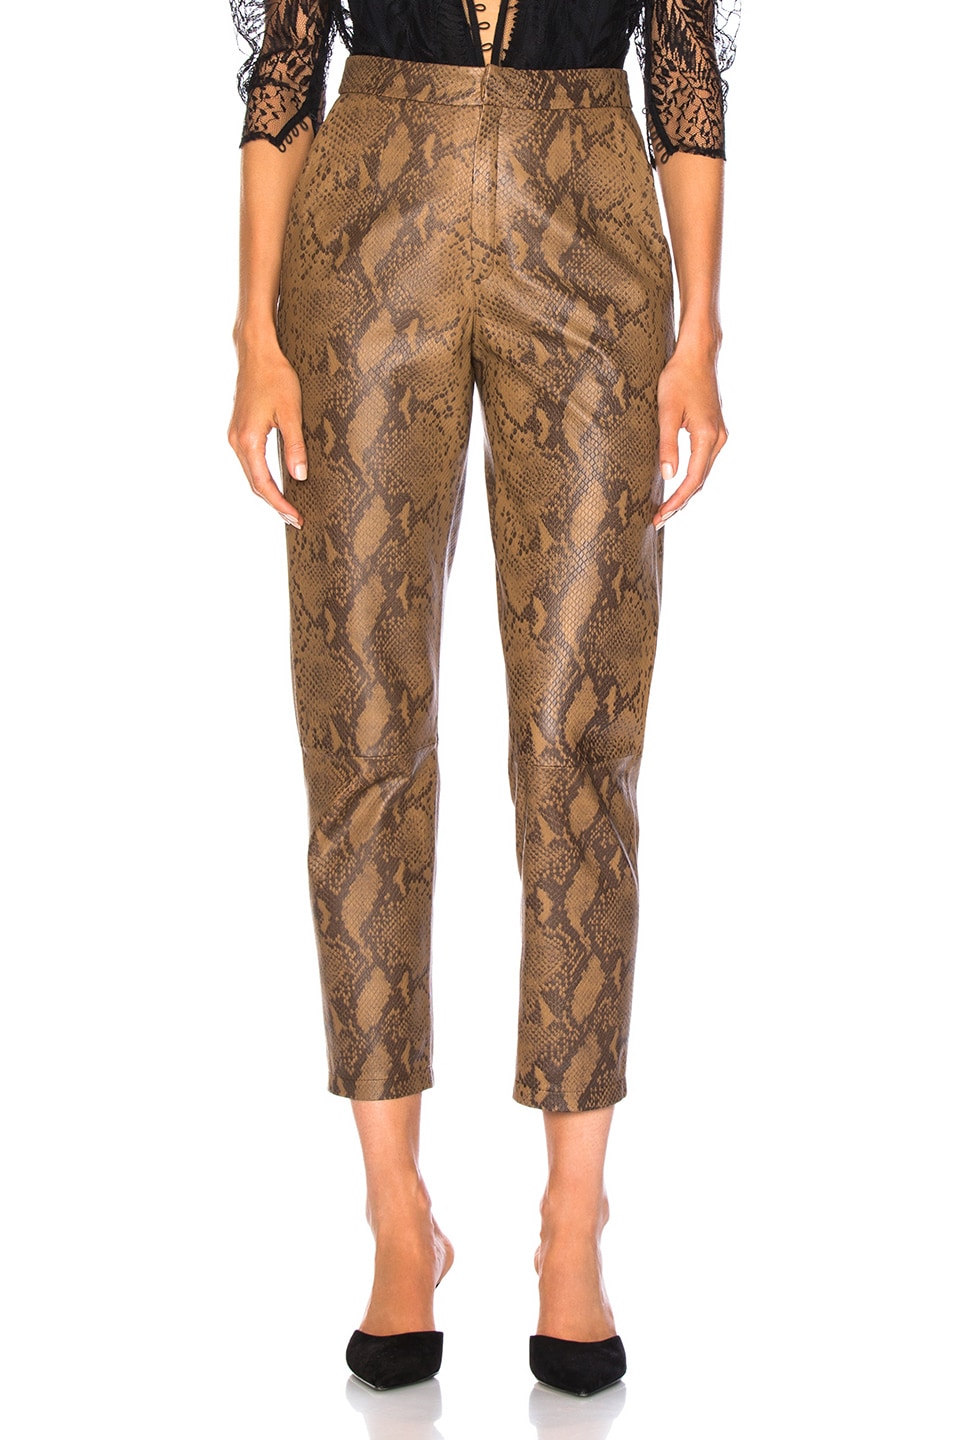 Image 1 of Zeynep Arcay for FWRD High Waist Skin Print Leather Pants in Creamy Coffee & Dark Chocolate